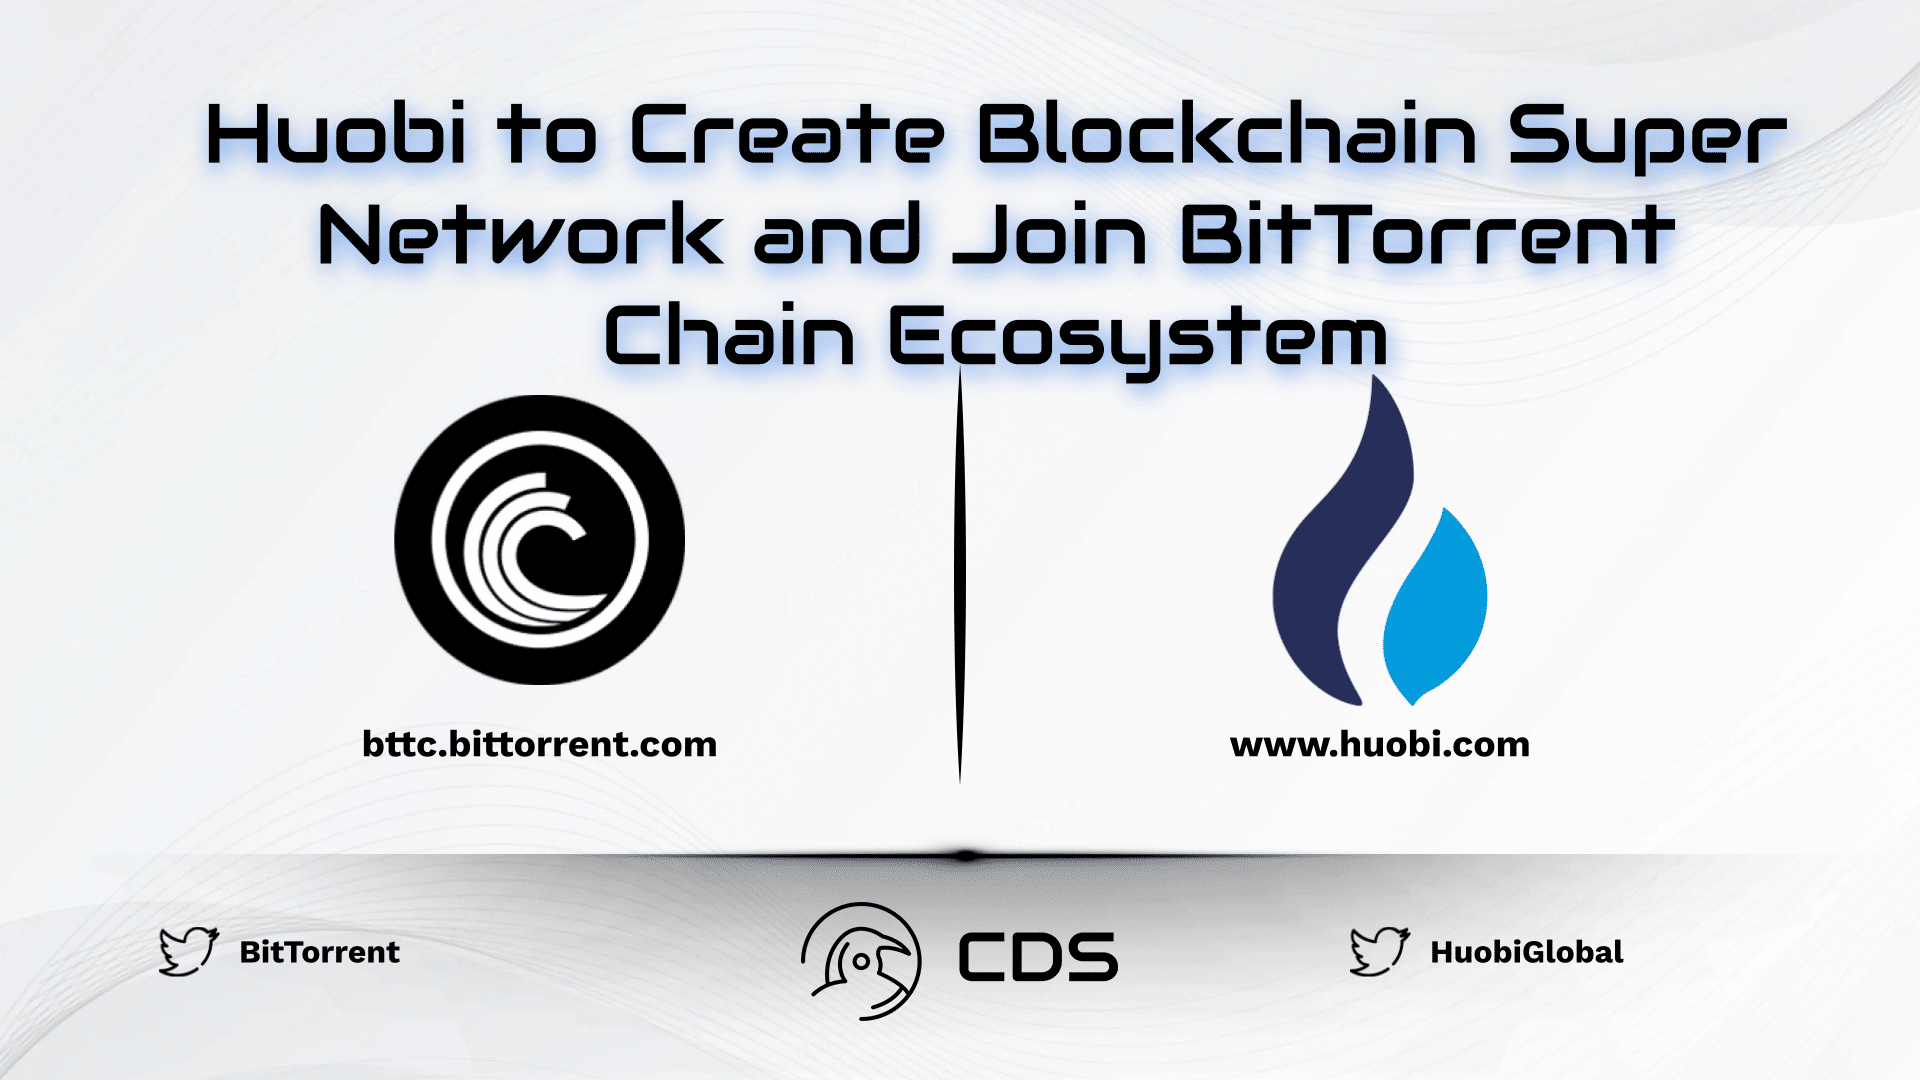 Huobi to Create Blockchain Super Network and Join BitTorrent Chain Ecosystem